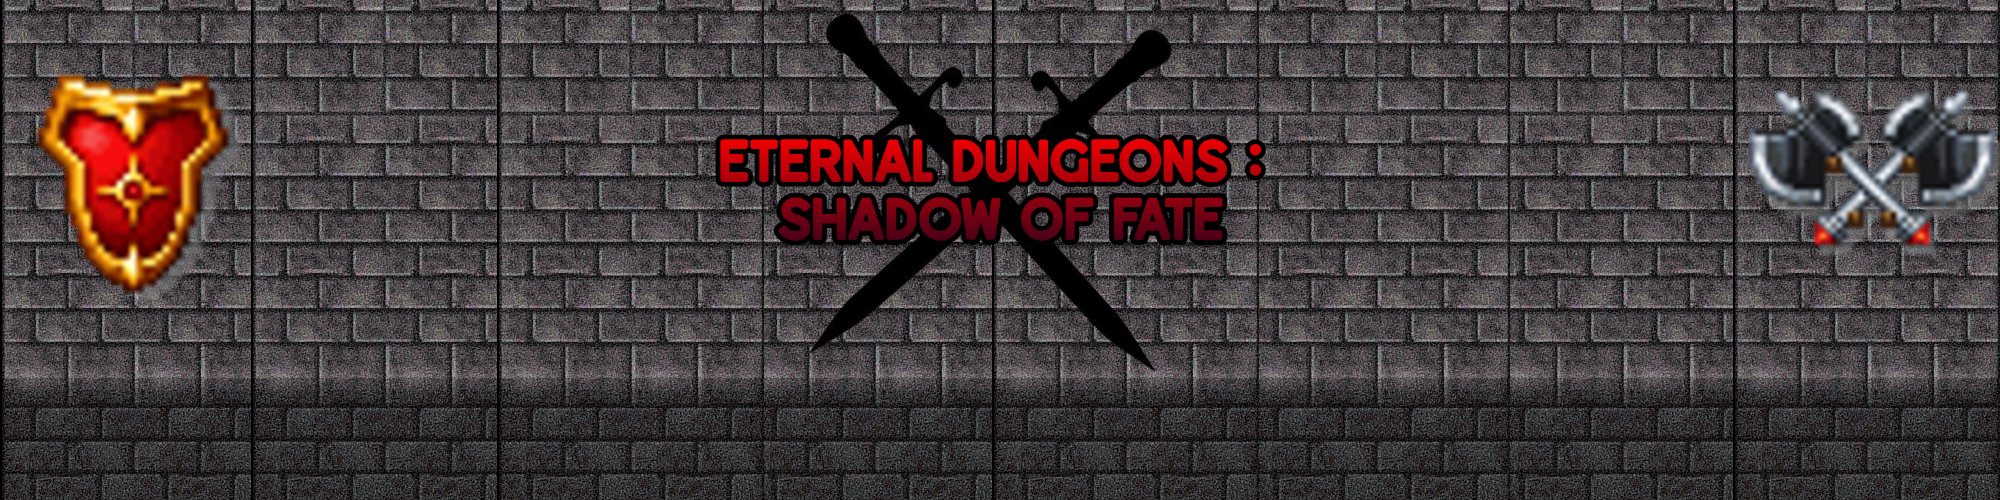 Eternal Dungeons: Shadows of Fate (Update 1.1)